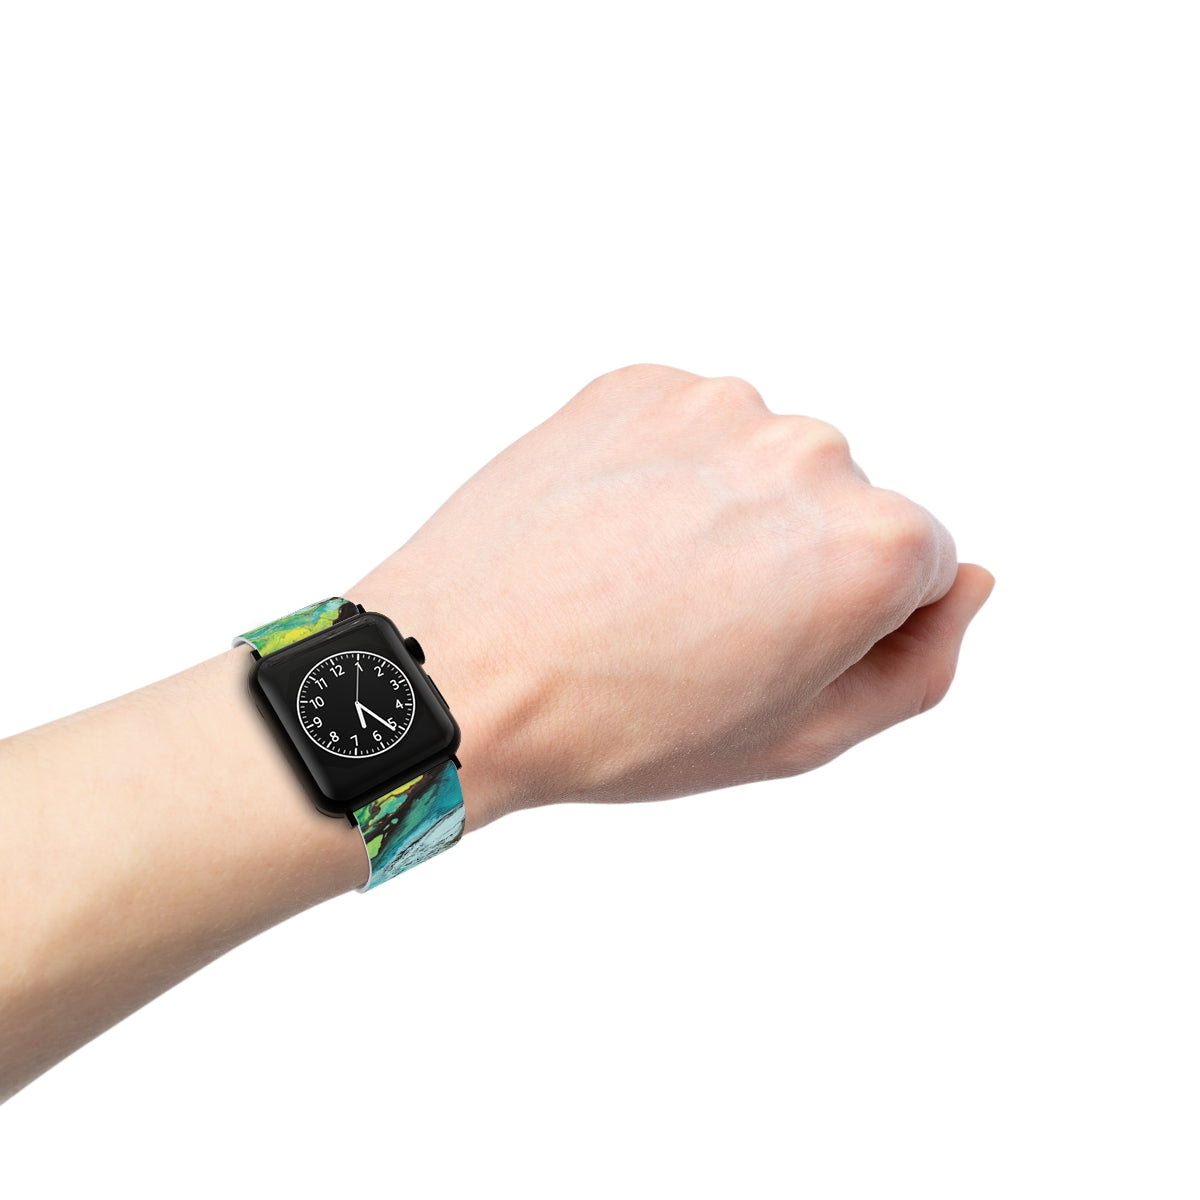 Watch Band for Apple Watch - Deep blue design